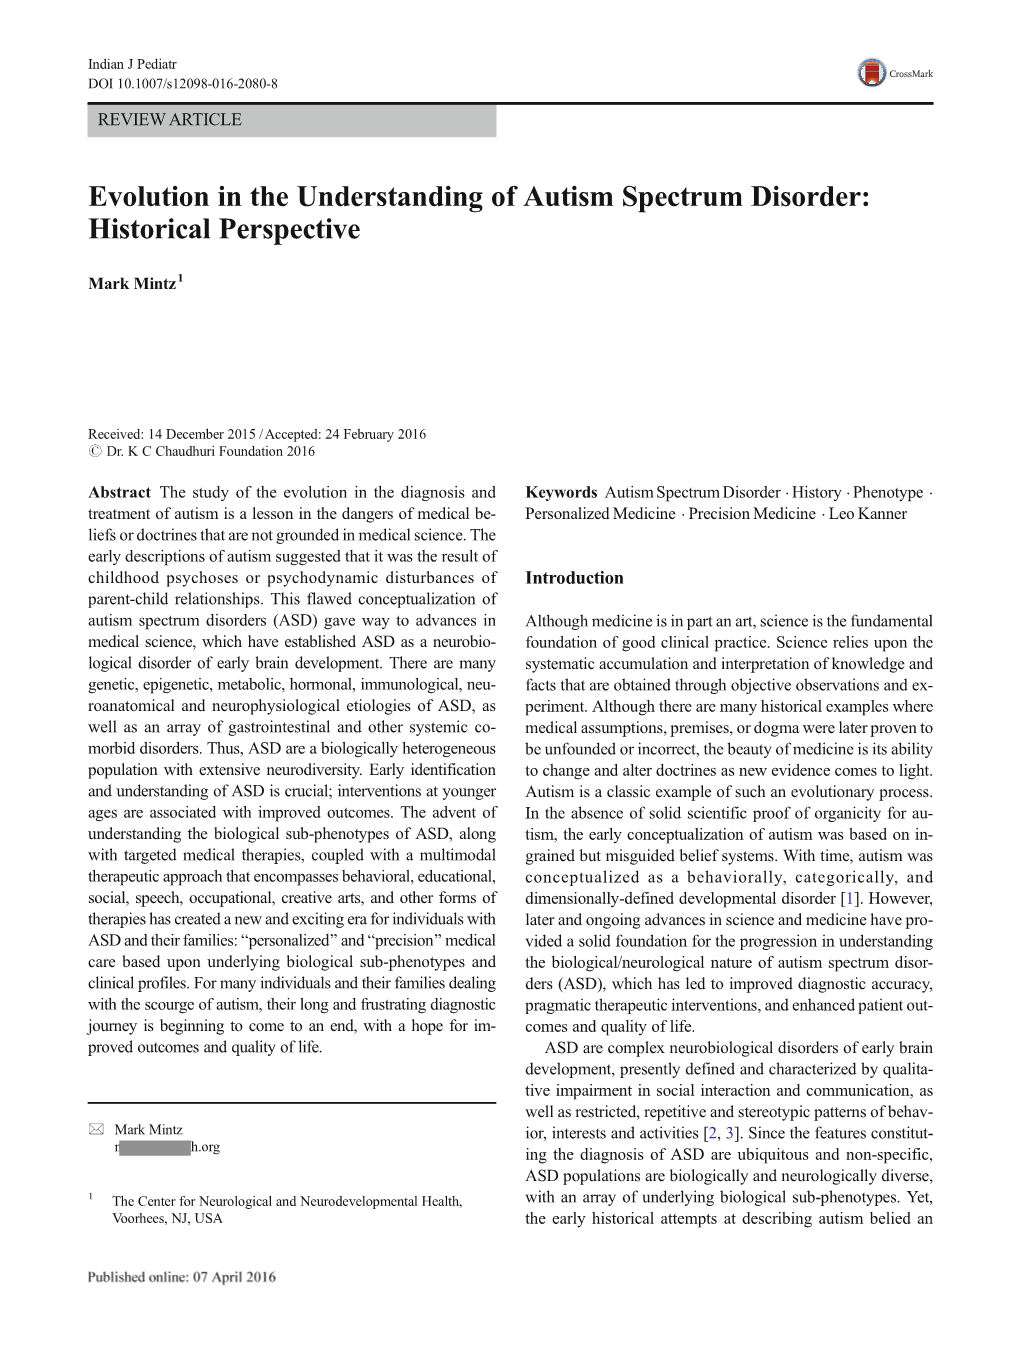 Evolution in the Understanding of Autism Spectrum Disorder: Historical Perspective